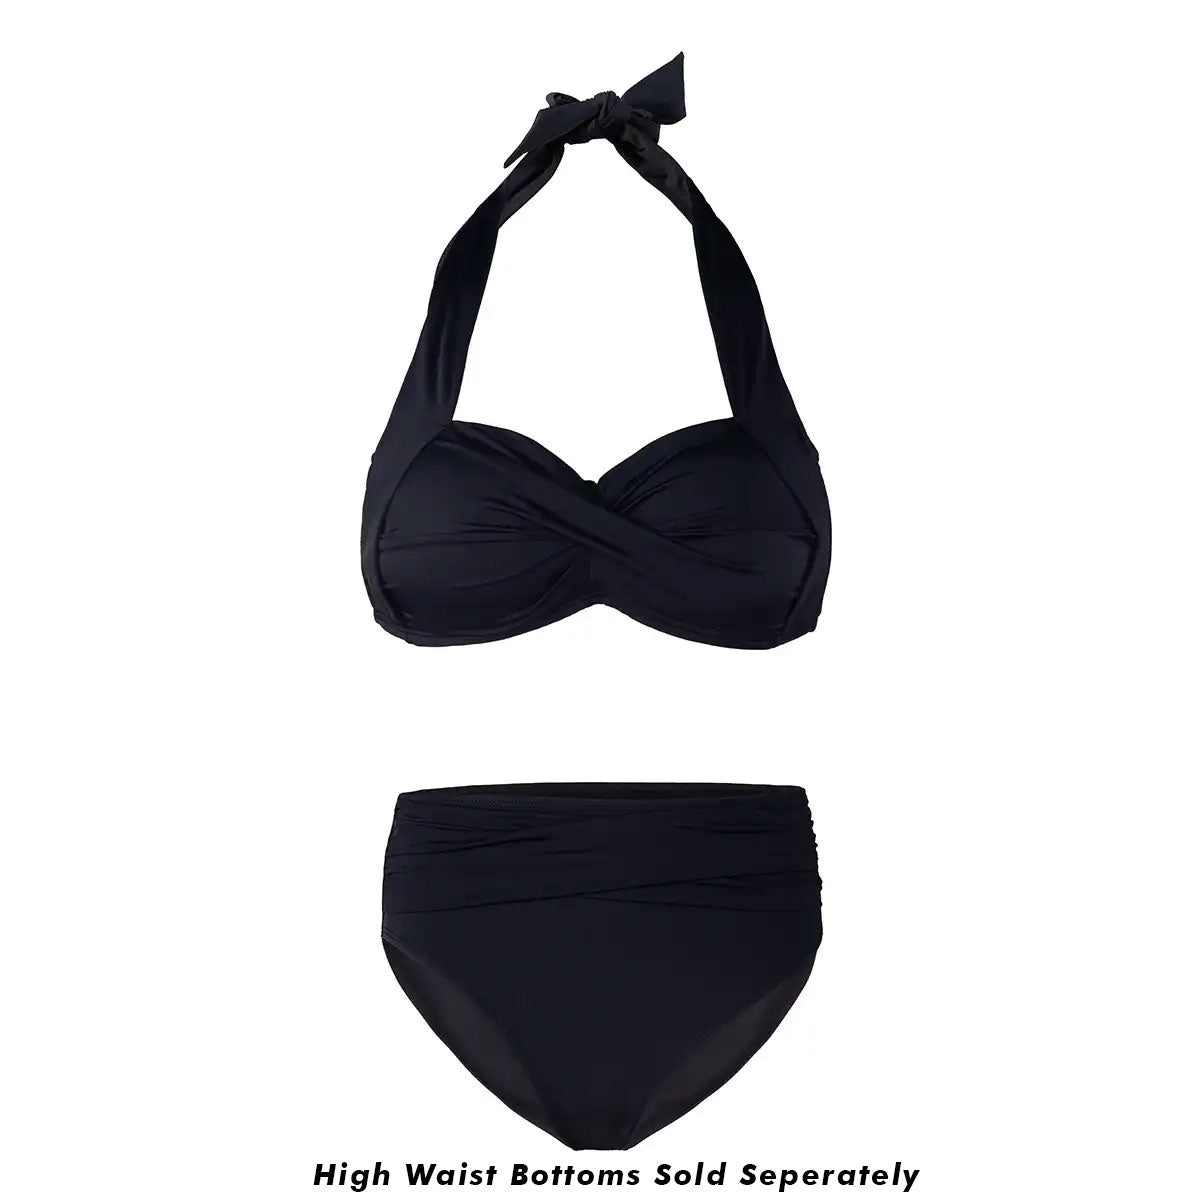 Midnight Black Women's Bikini Top – Bronte Co